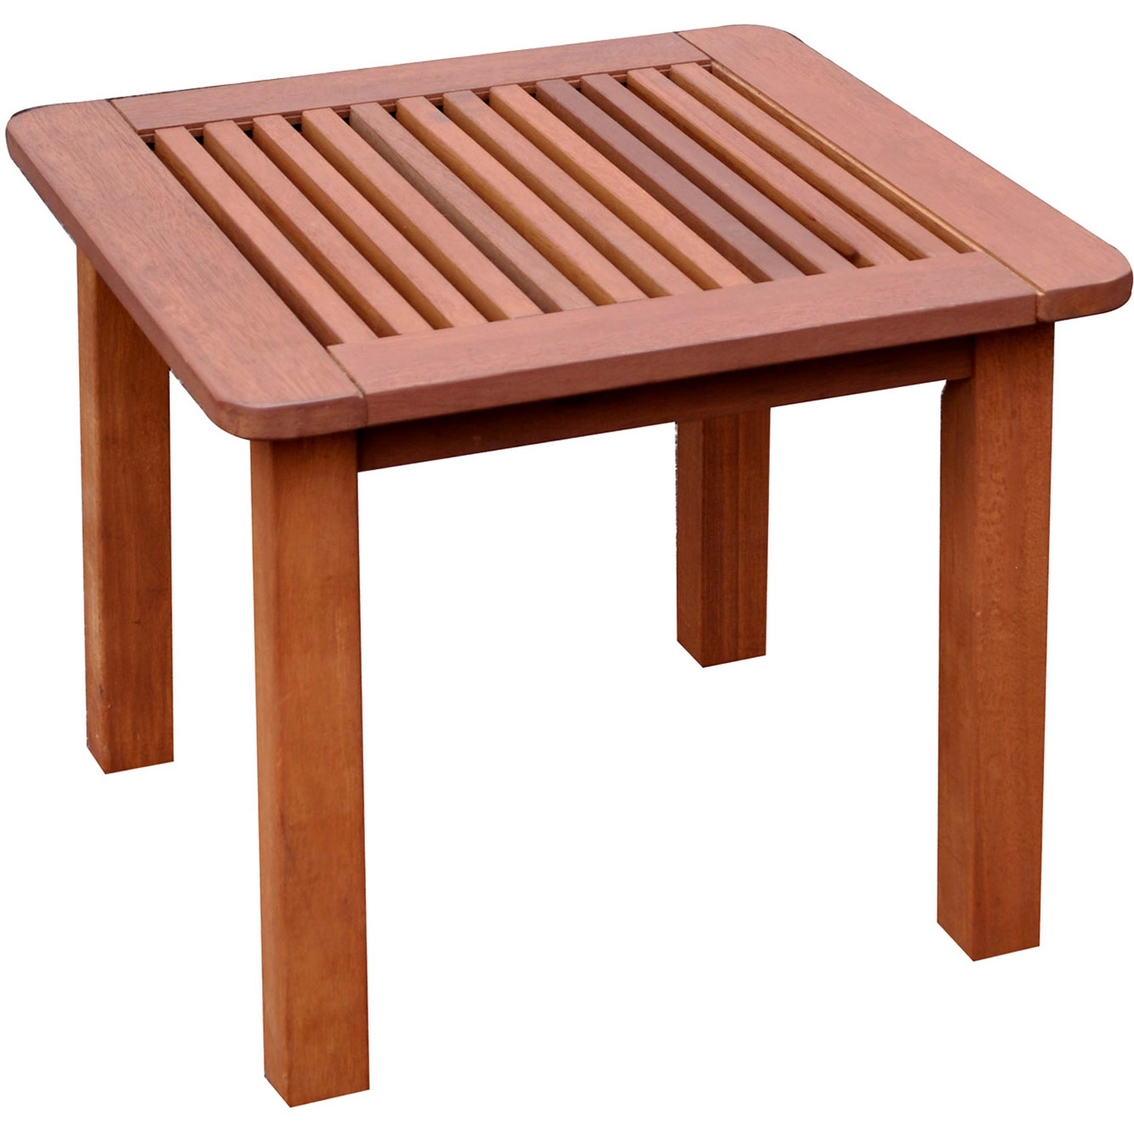 CorLiving Miramar Hardwood Outdoor Side Table - Image 2 of 4